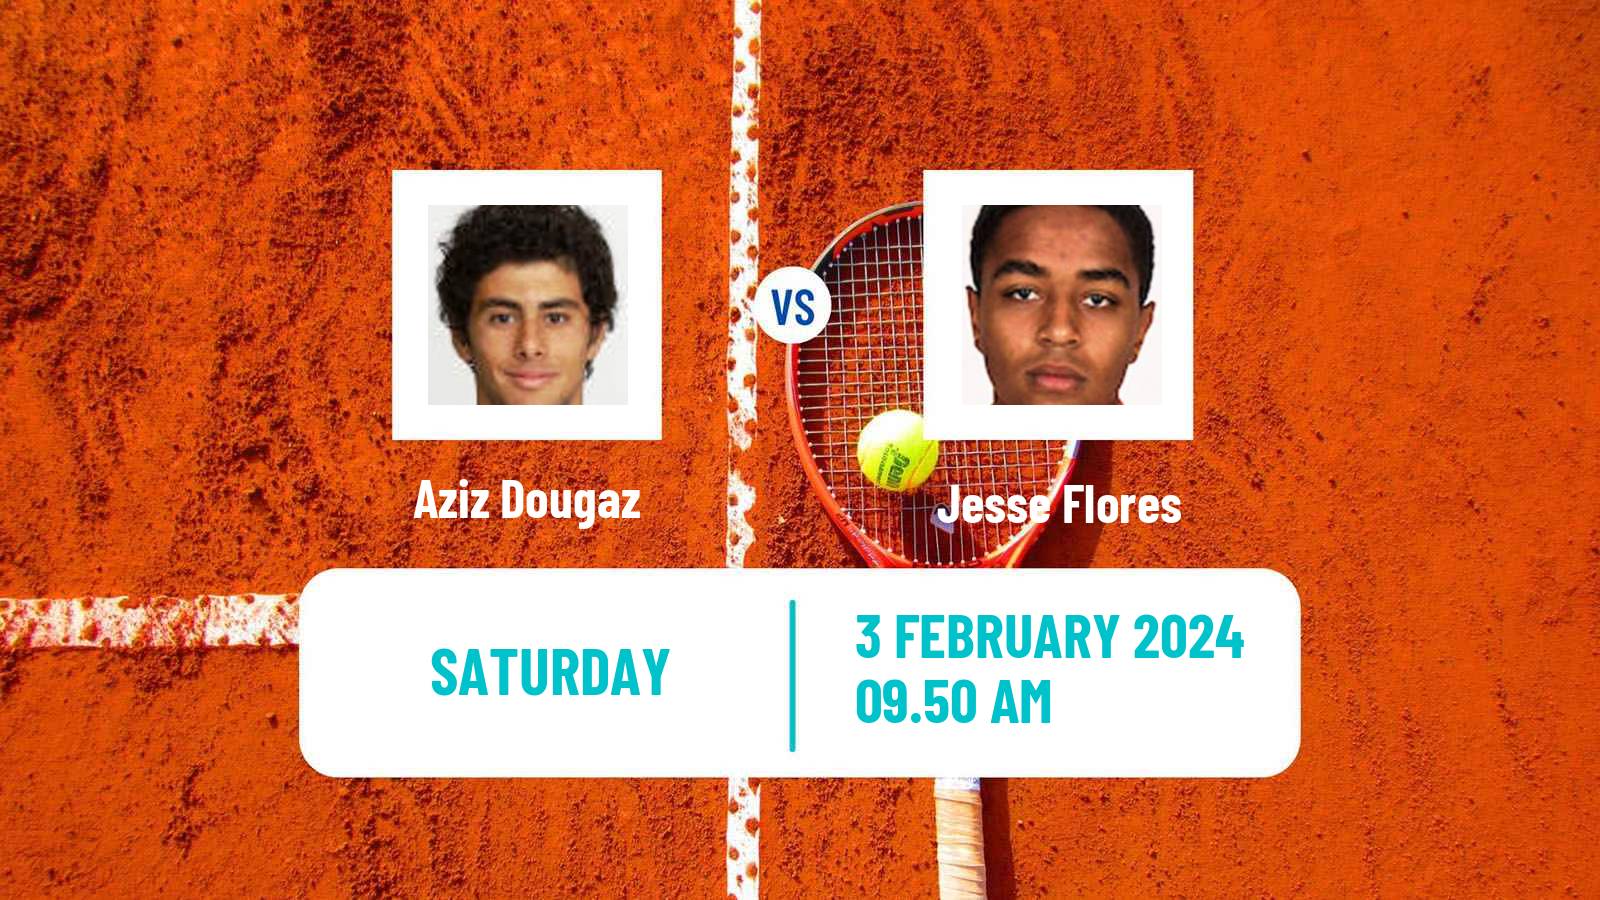 Tennis Davis Cup World Group II Aziz Dougaz - Jesse Flores